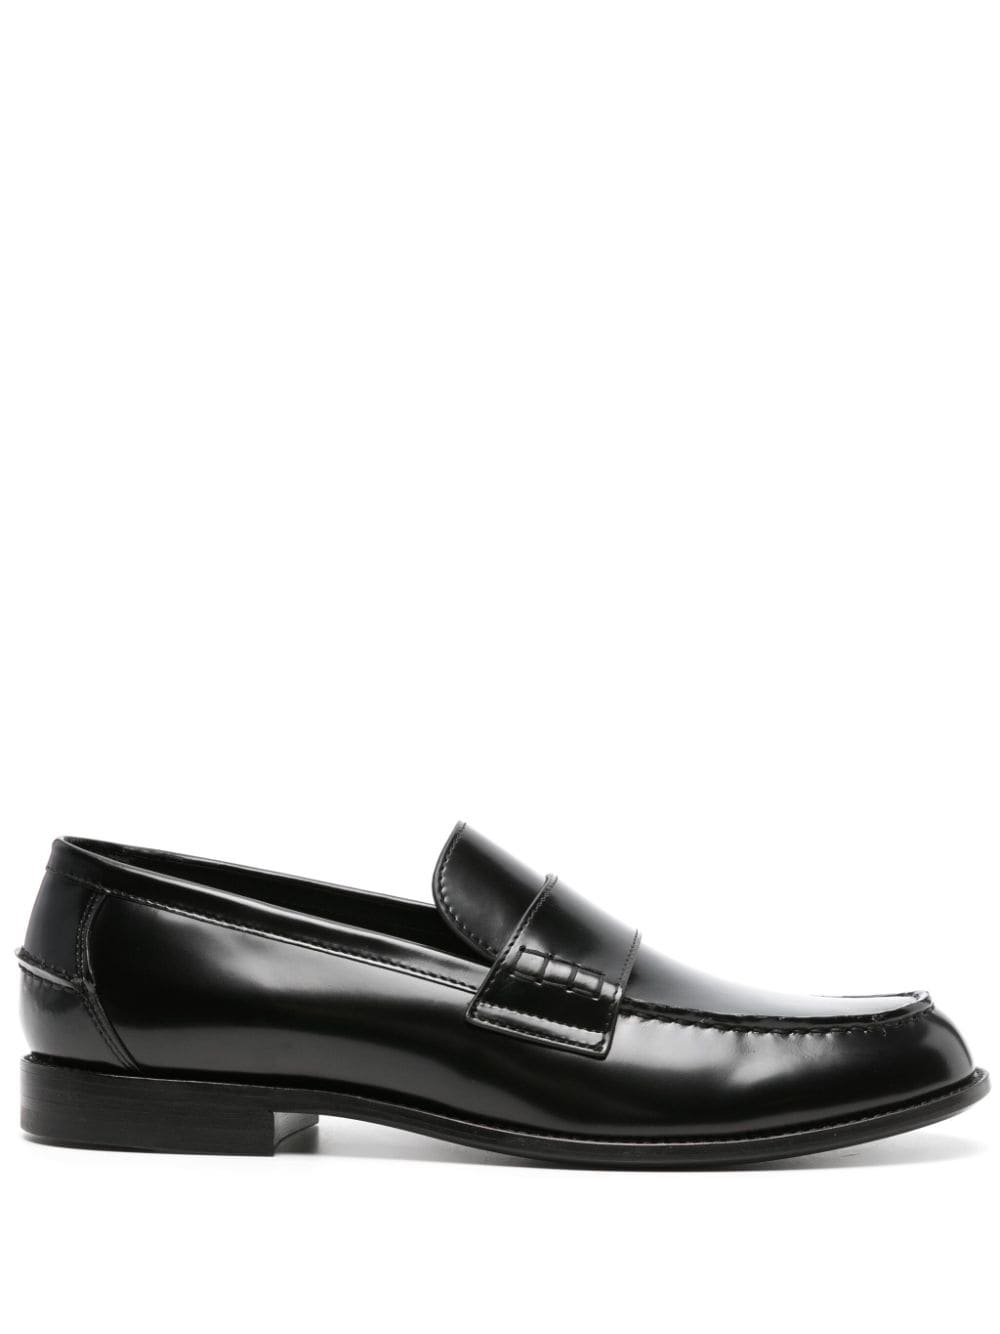 Manuel Ritz round-toe leather loafers - Black von Manuel Ritz